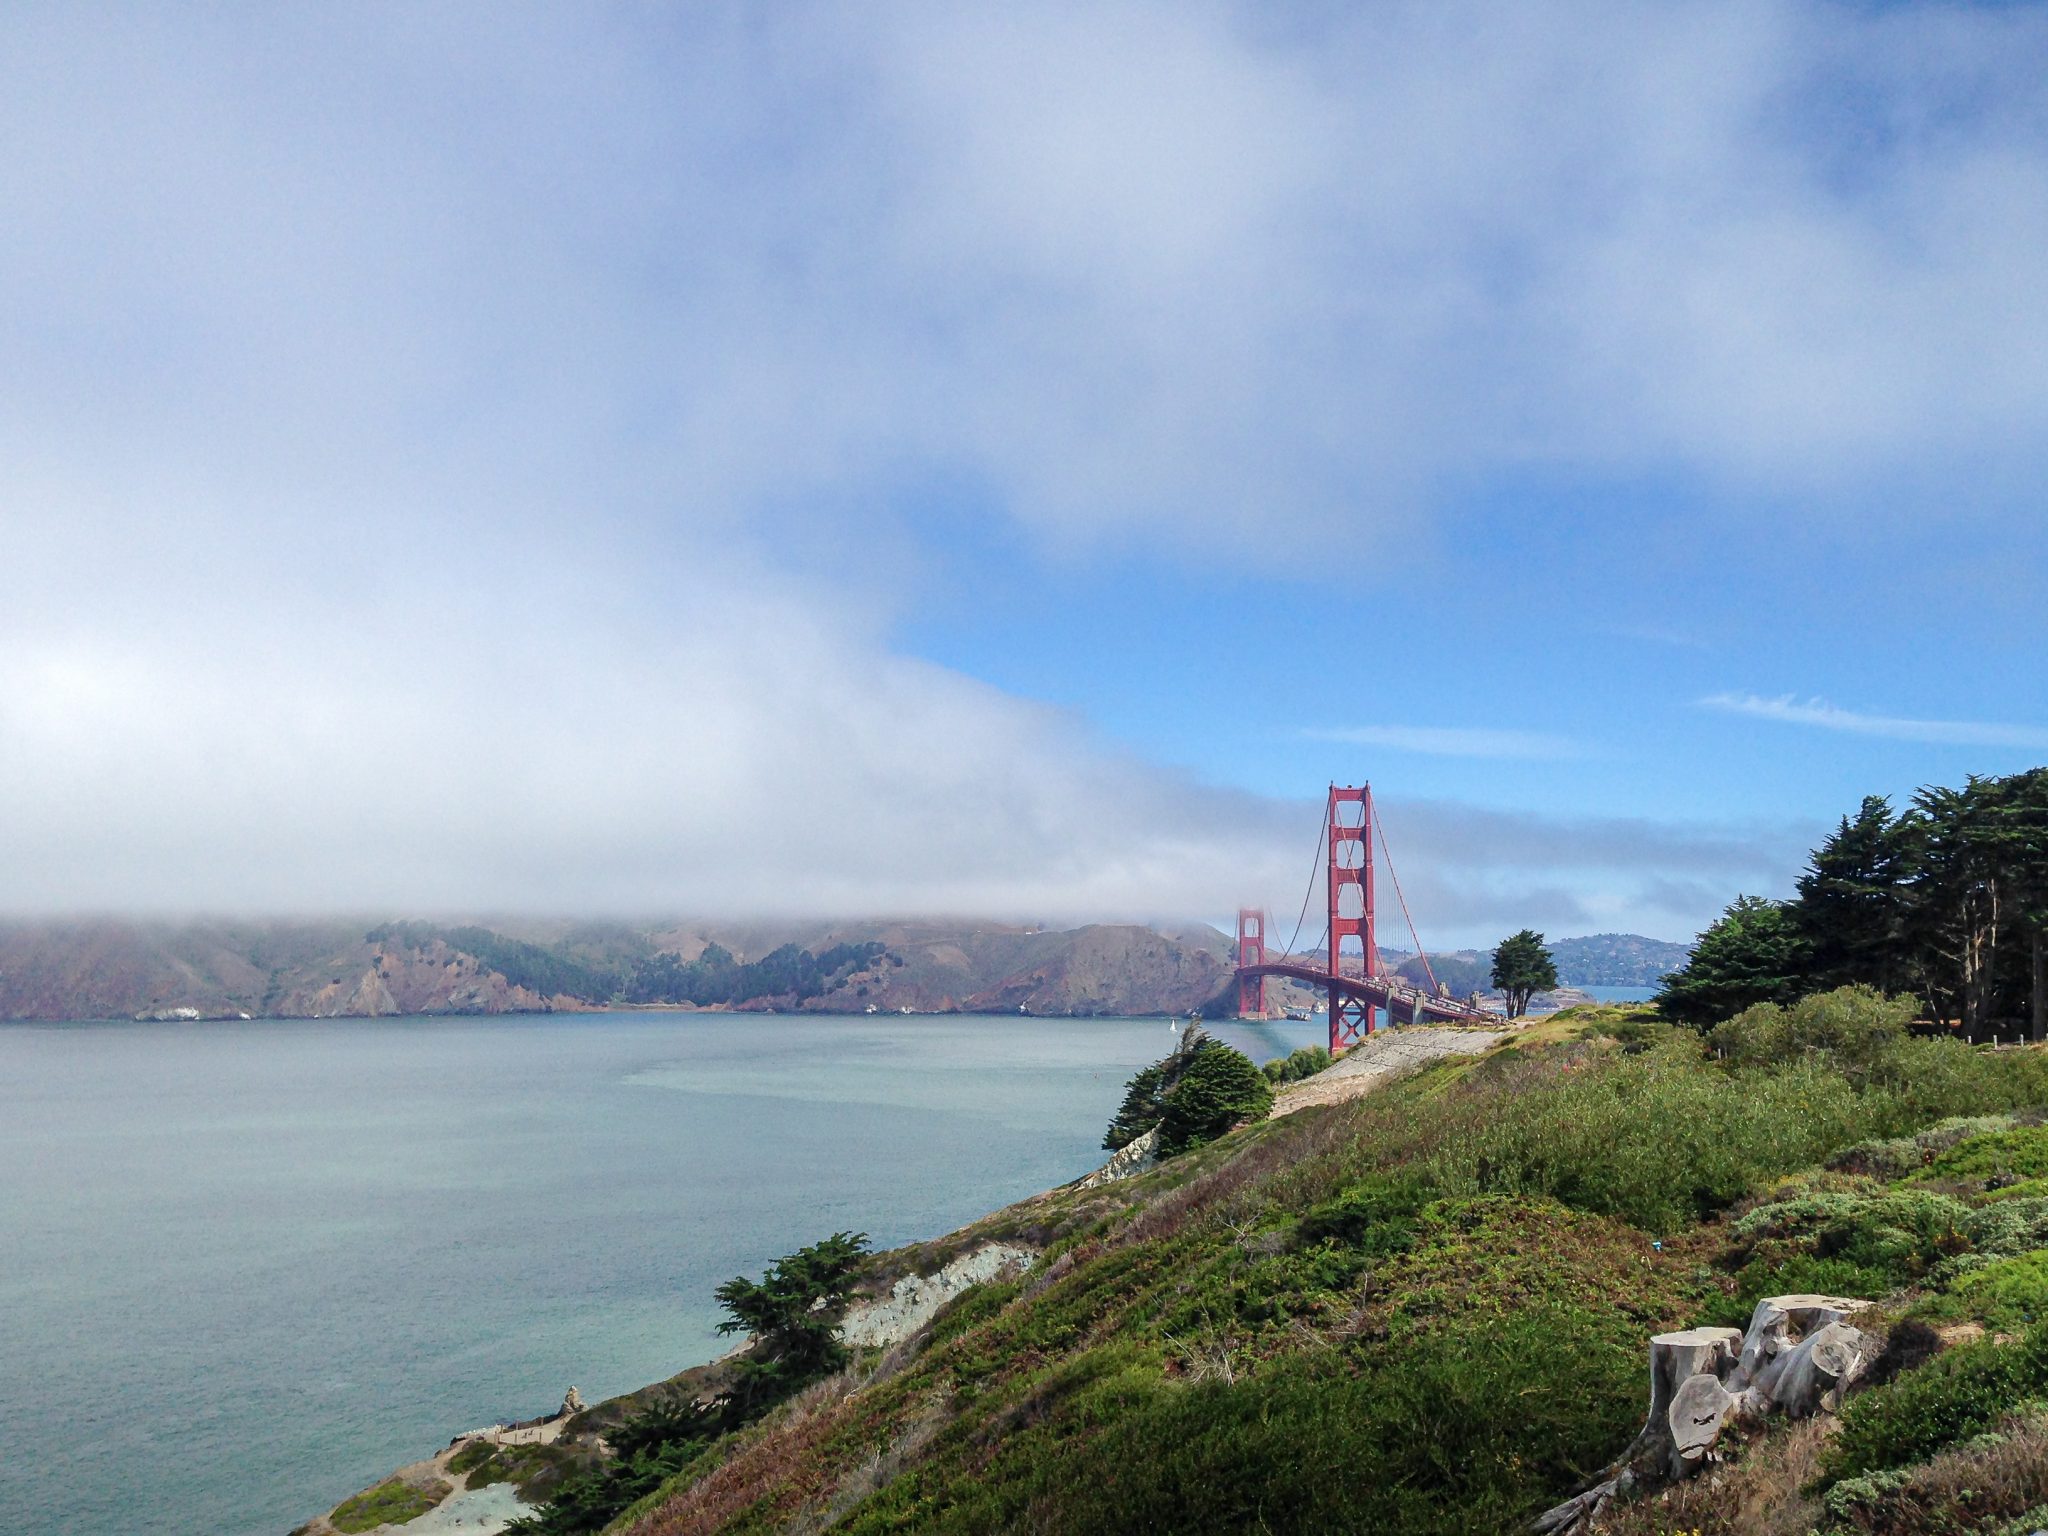 View of Golden Gate Bridge from Presidio bluffs